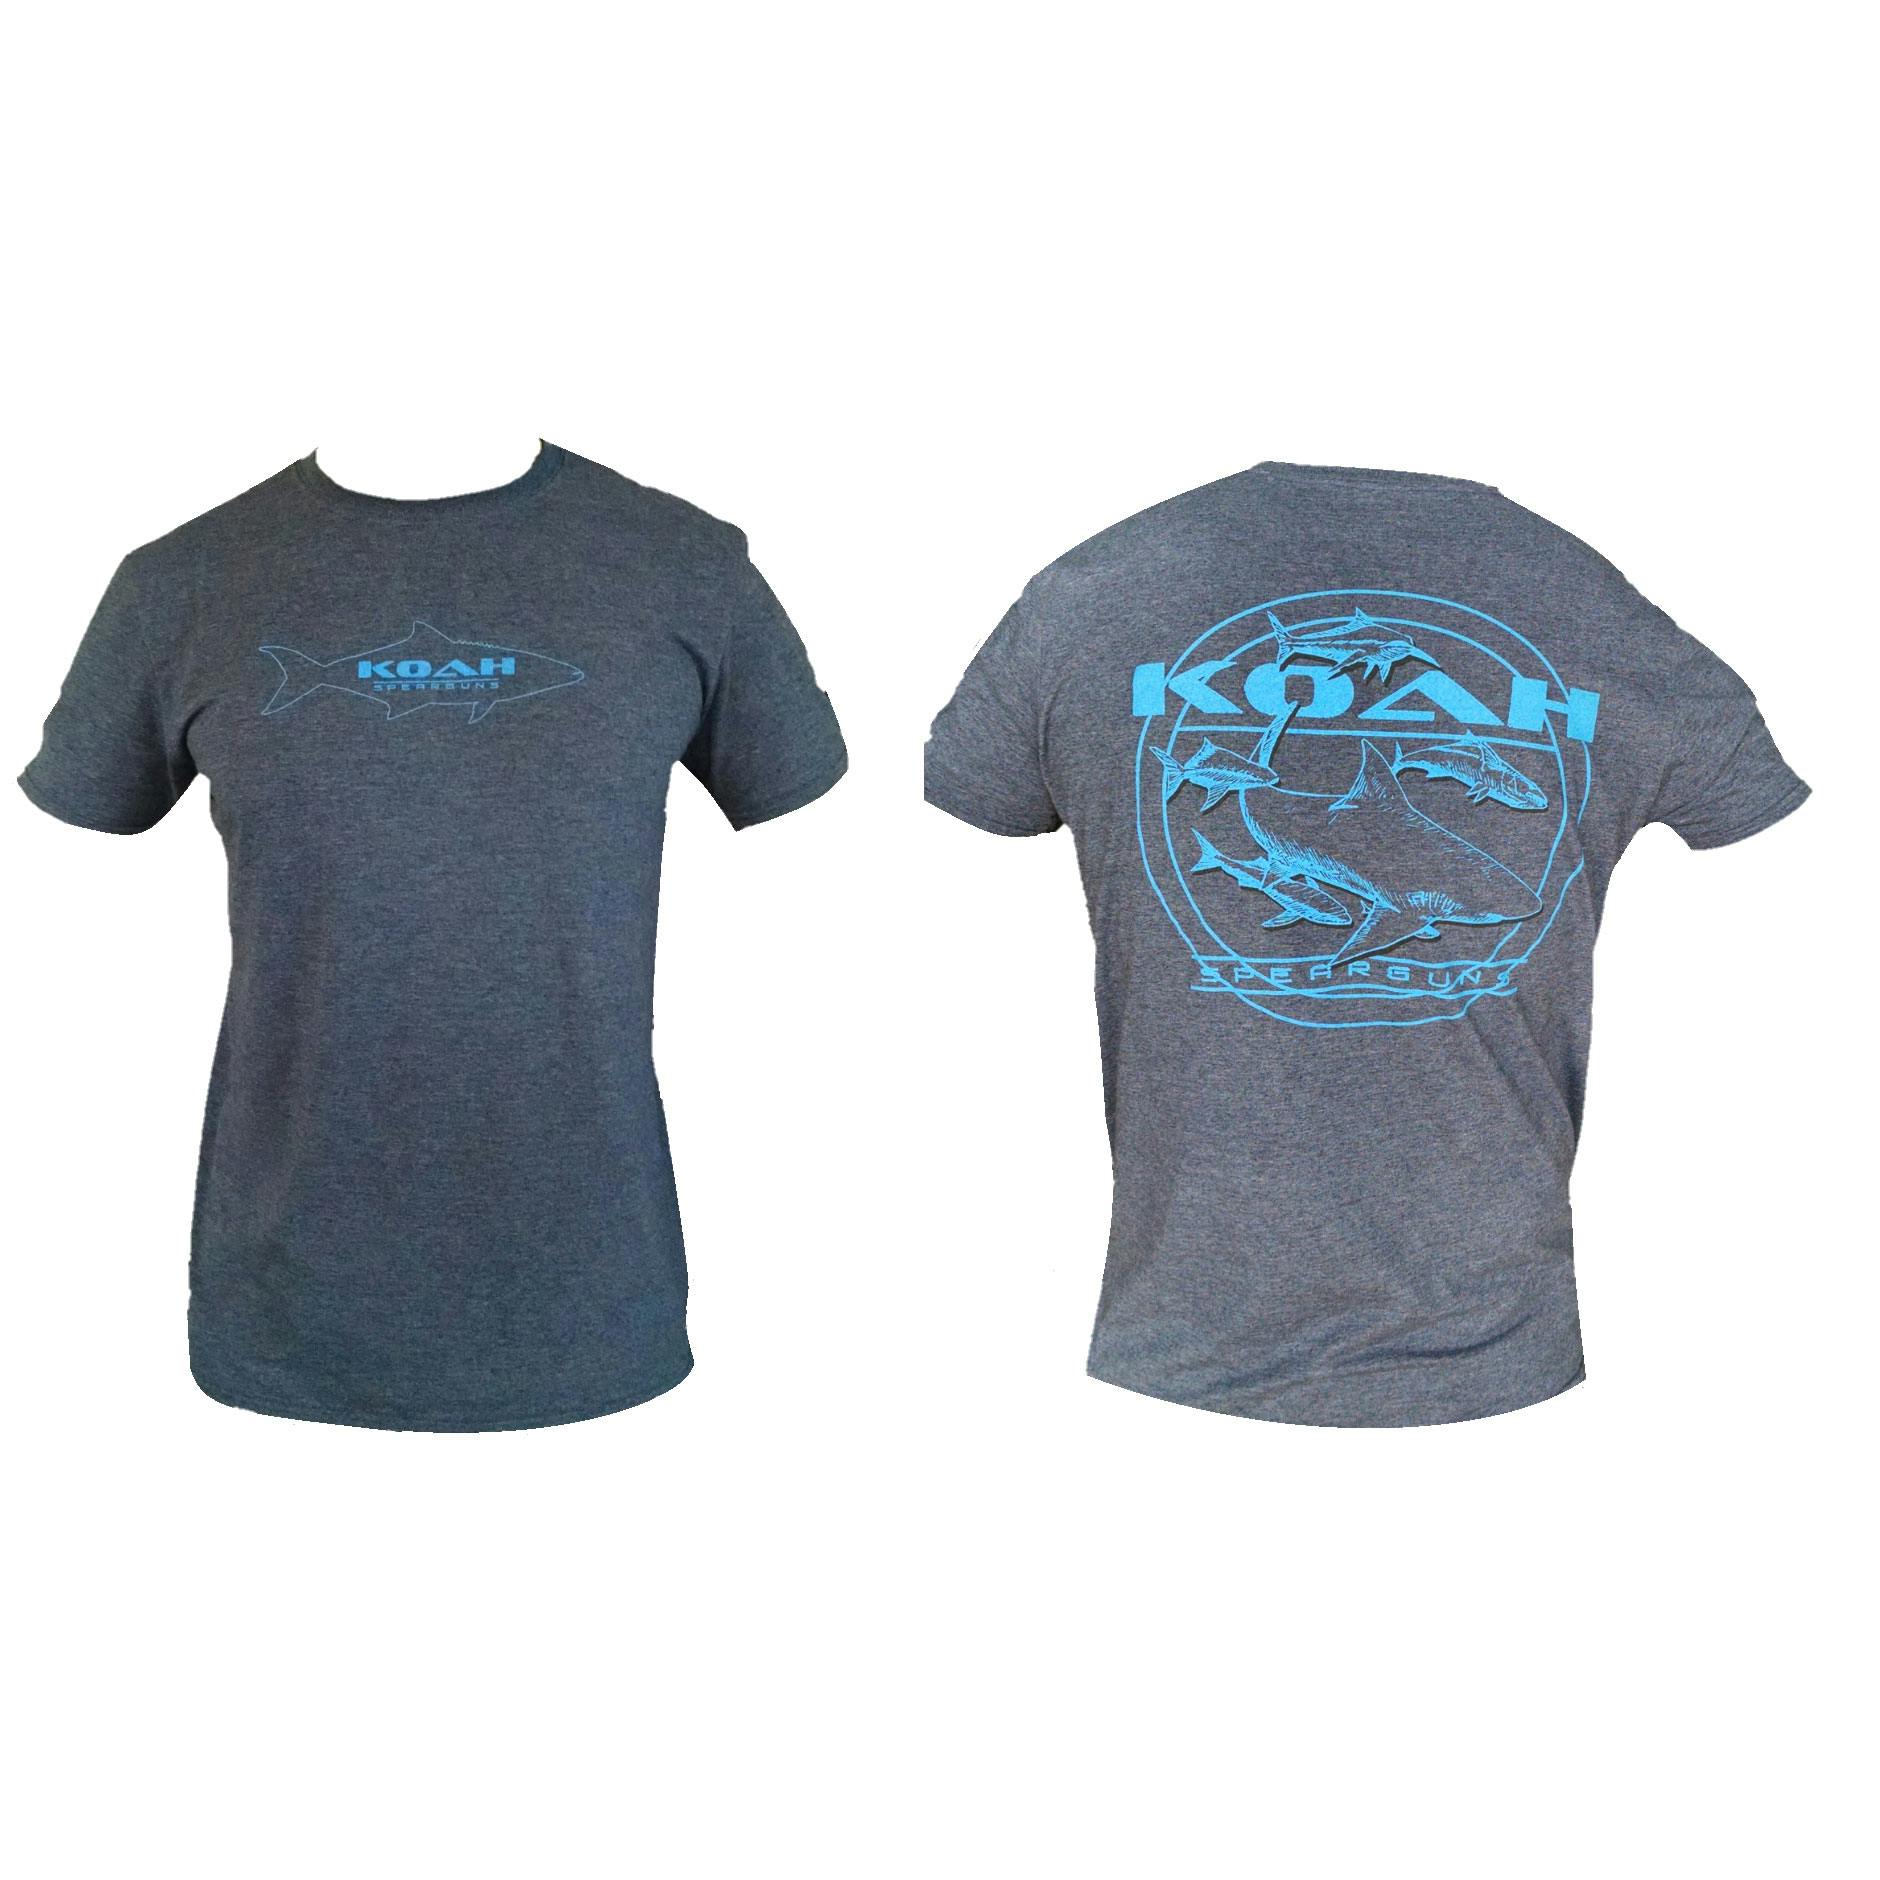 Koah Shark Cobia Spearfishing T-Shirt Front and Back - Navy